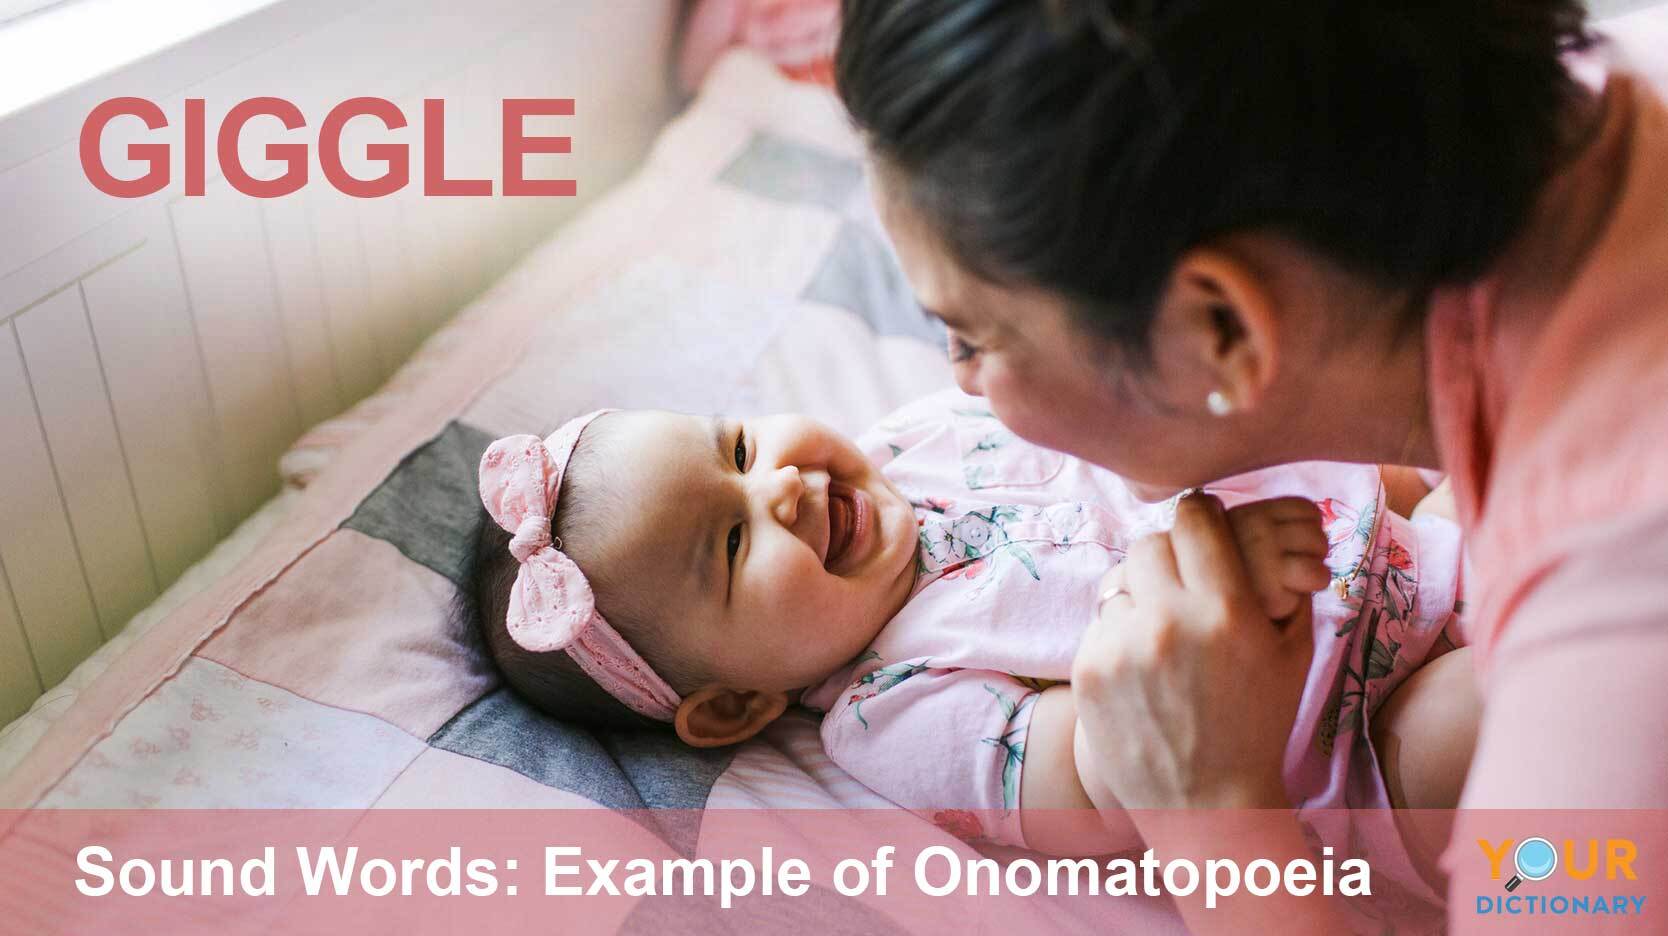 onomatopoeia example of vocal sound word giggle